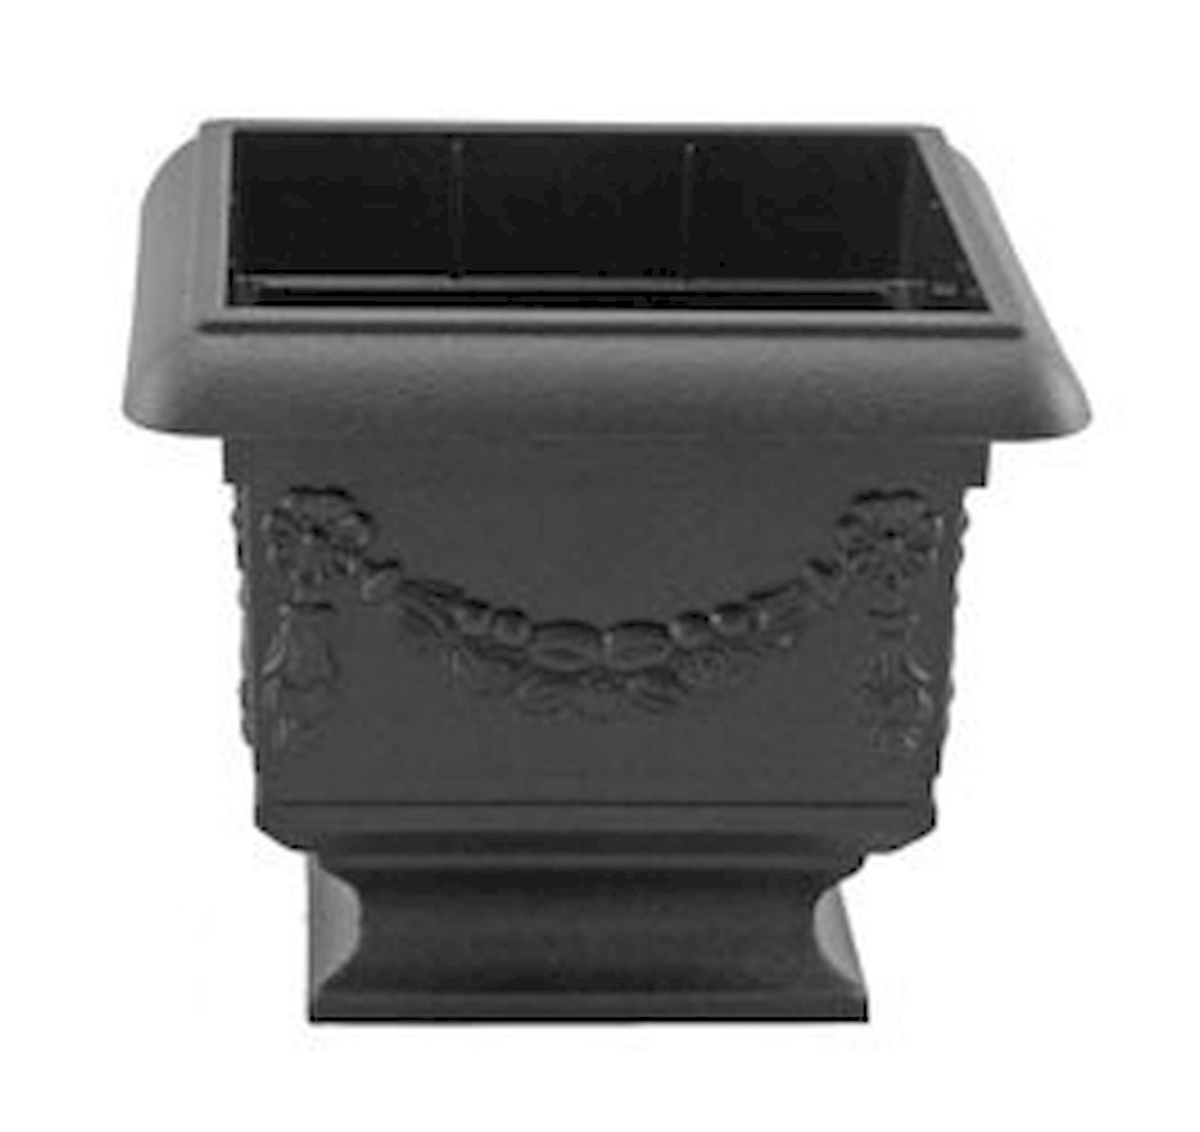 Picture of 212 Main AI-DL102BLA Decorative Square Black on a Pedestal Planter